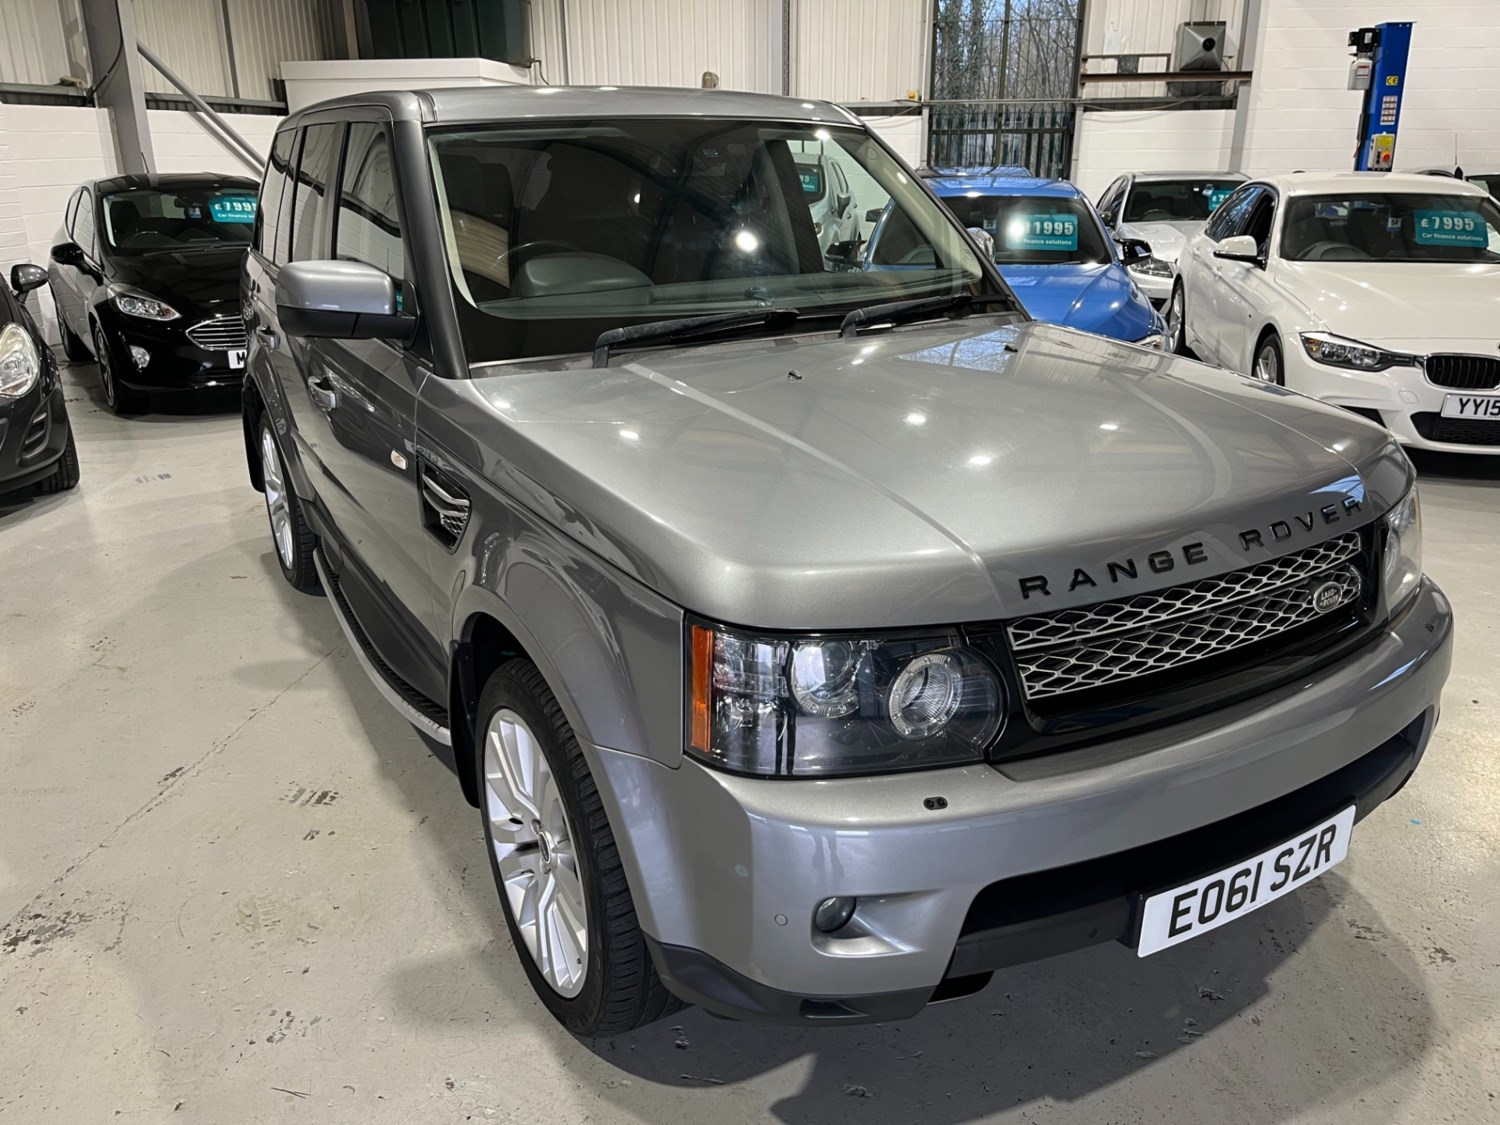 Land Rover Range Rover Sport Listing Image